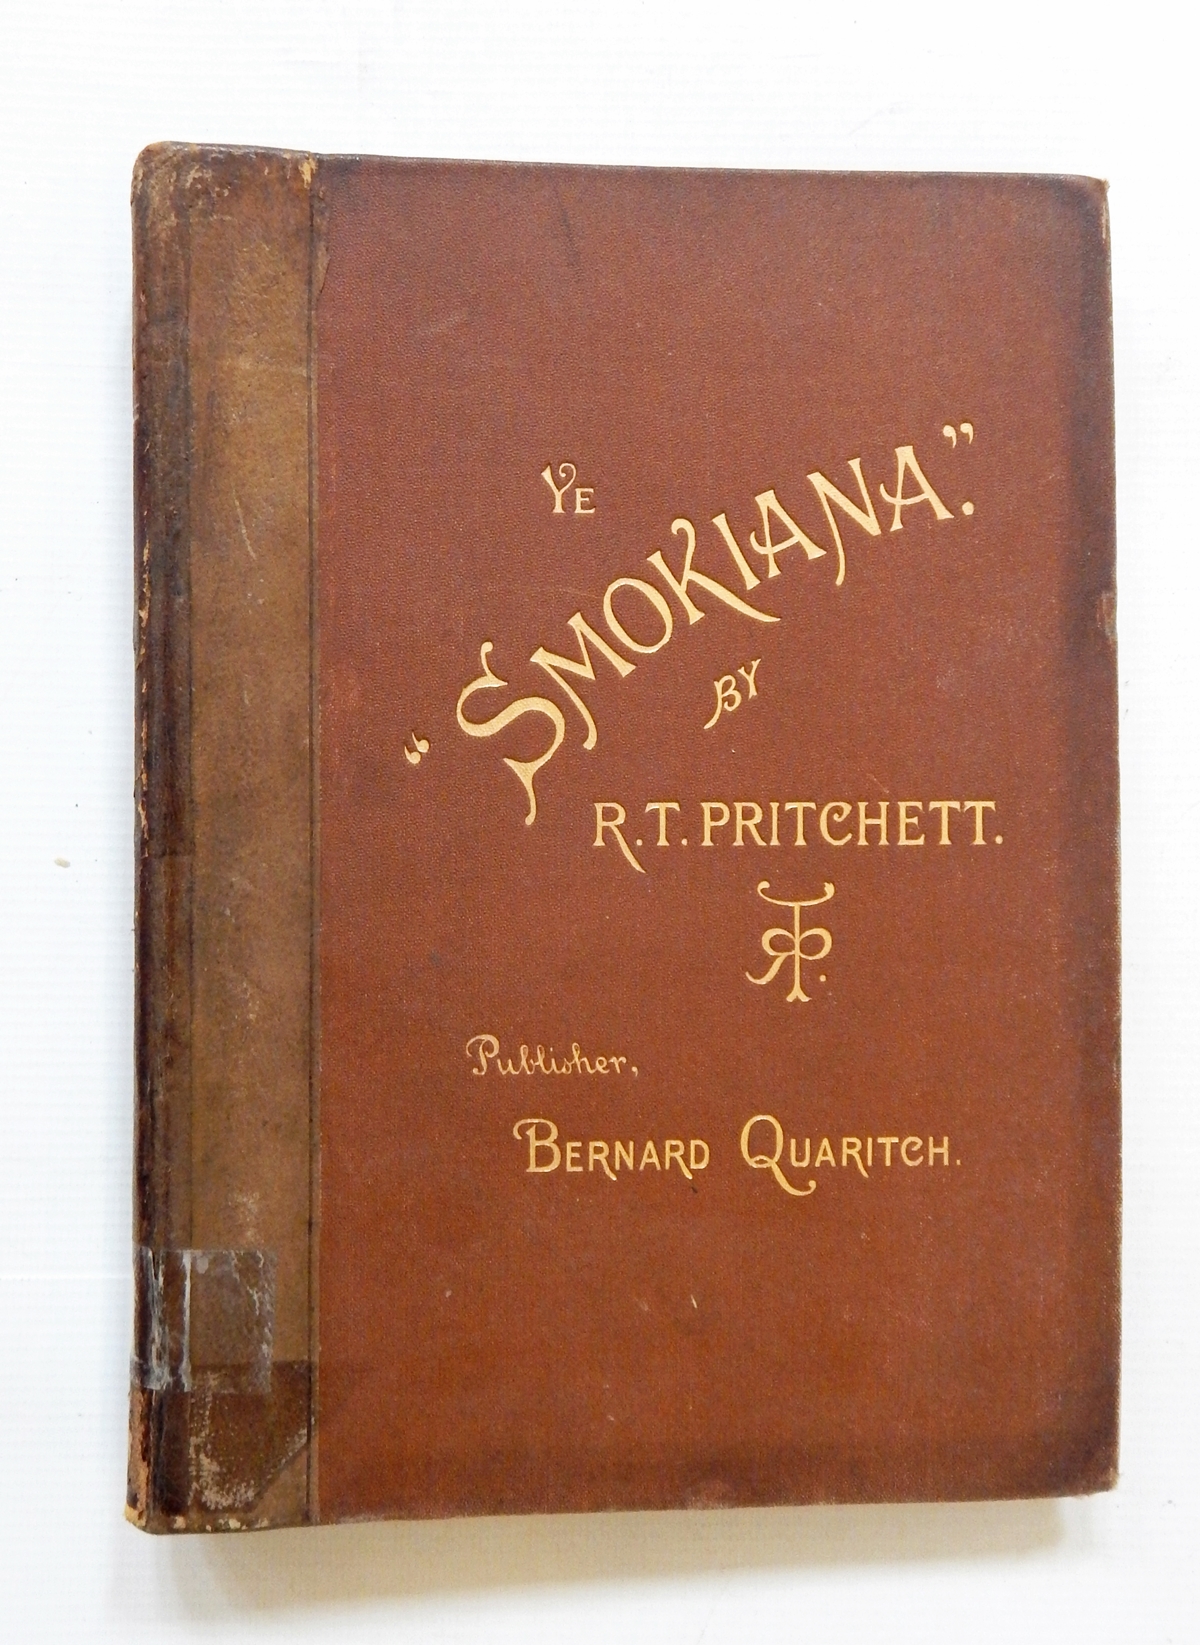 Pritchett, R T "Ye Smokiana", publ Bernard Quaritch,